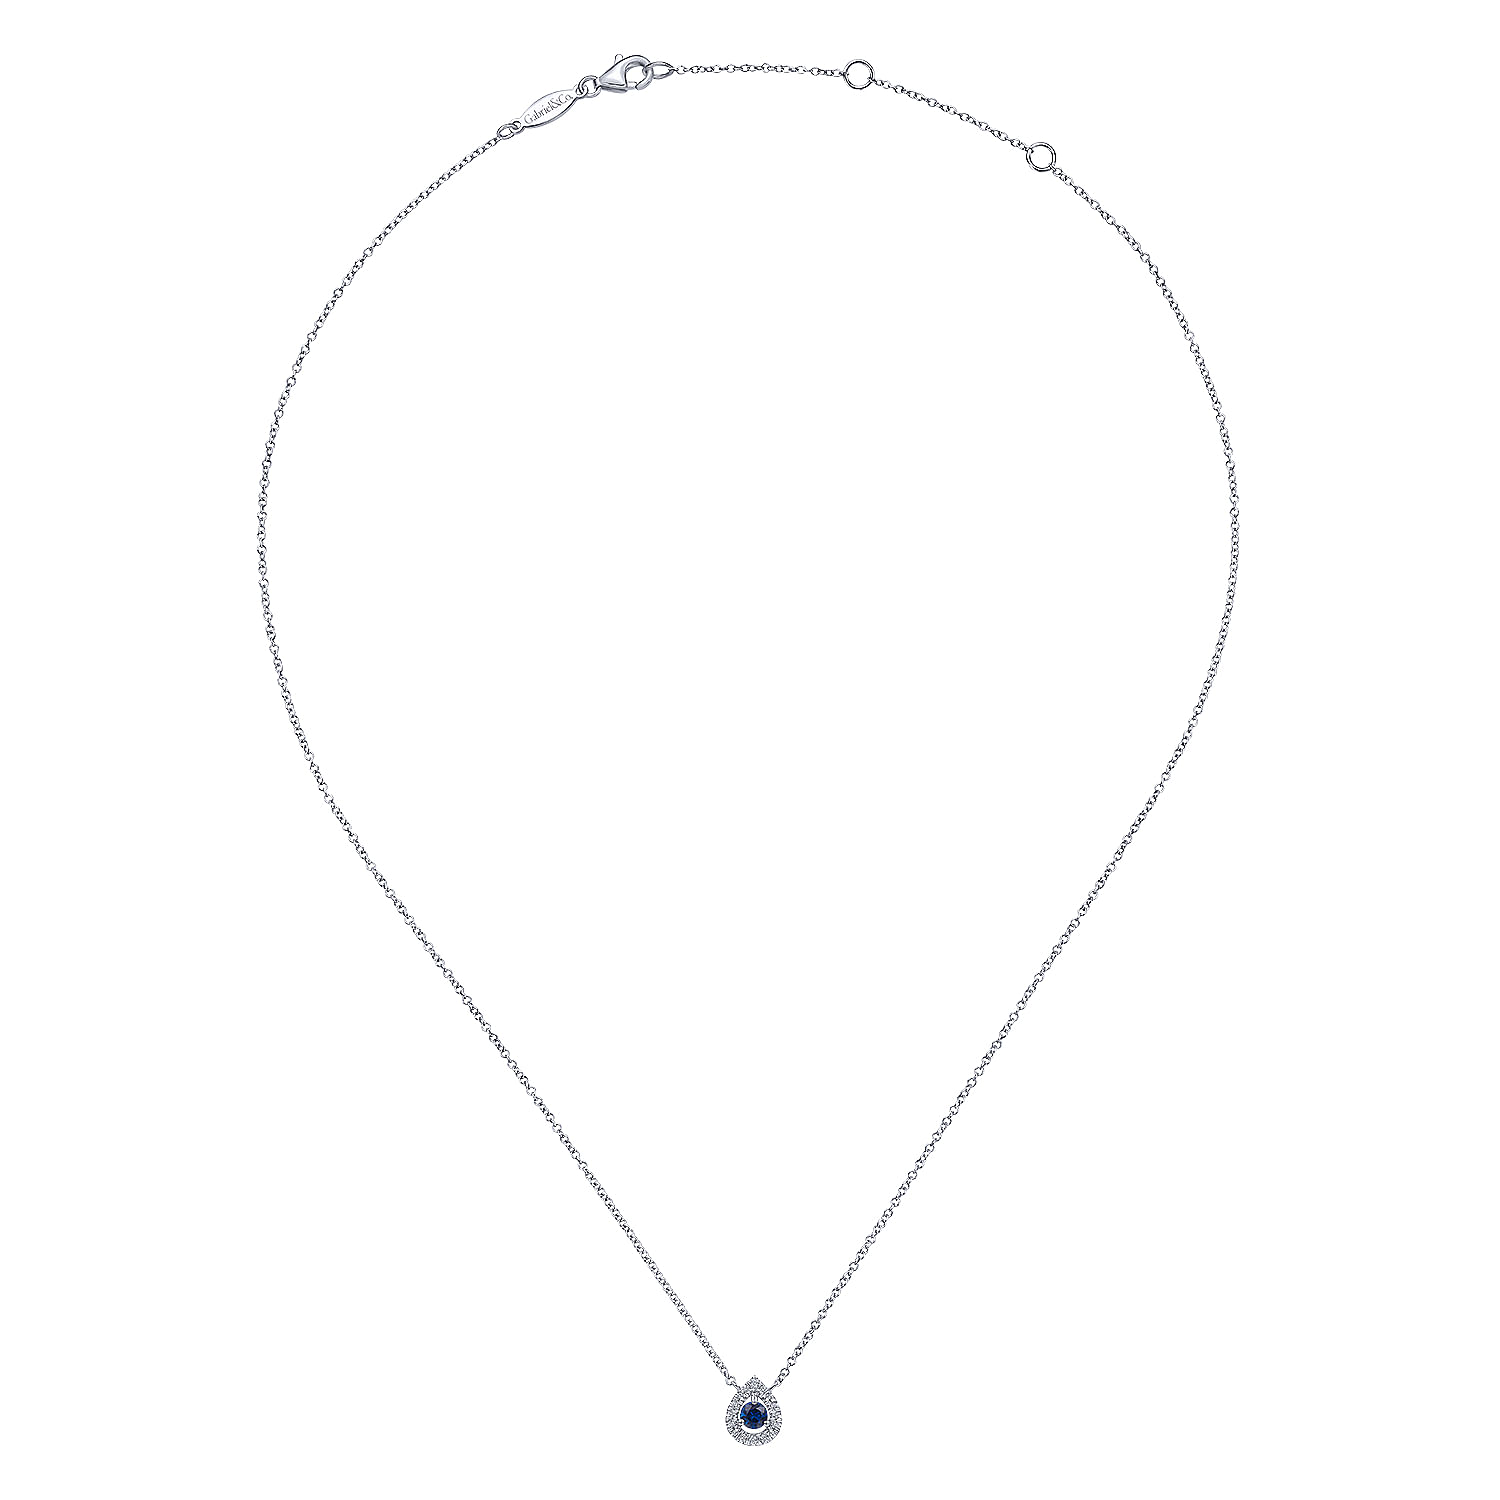 14K White Gold Teardrop Sapphire and Diamond Halo Pendant Necklace